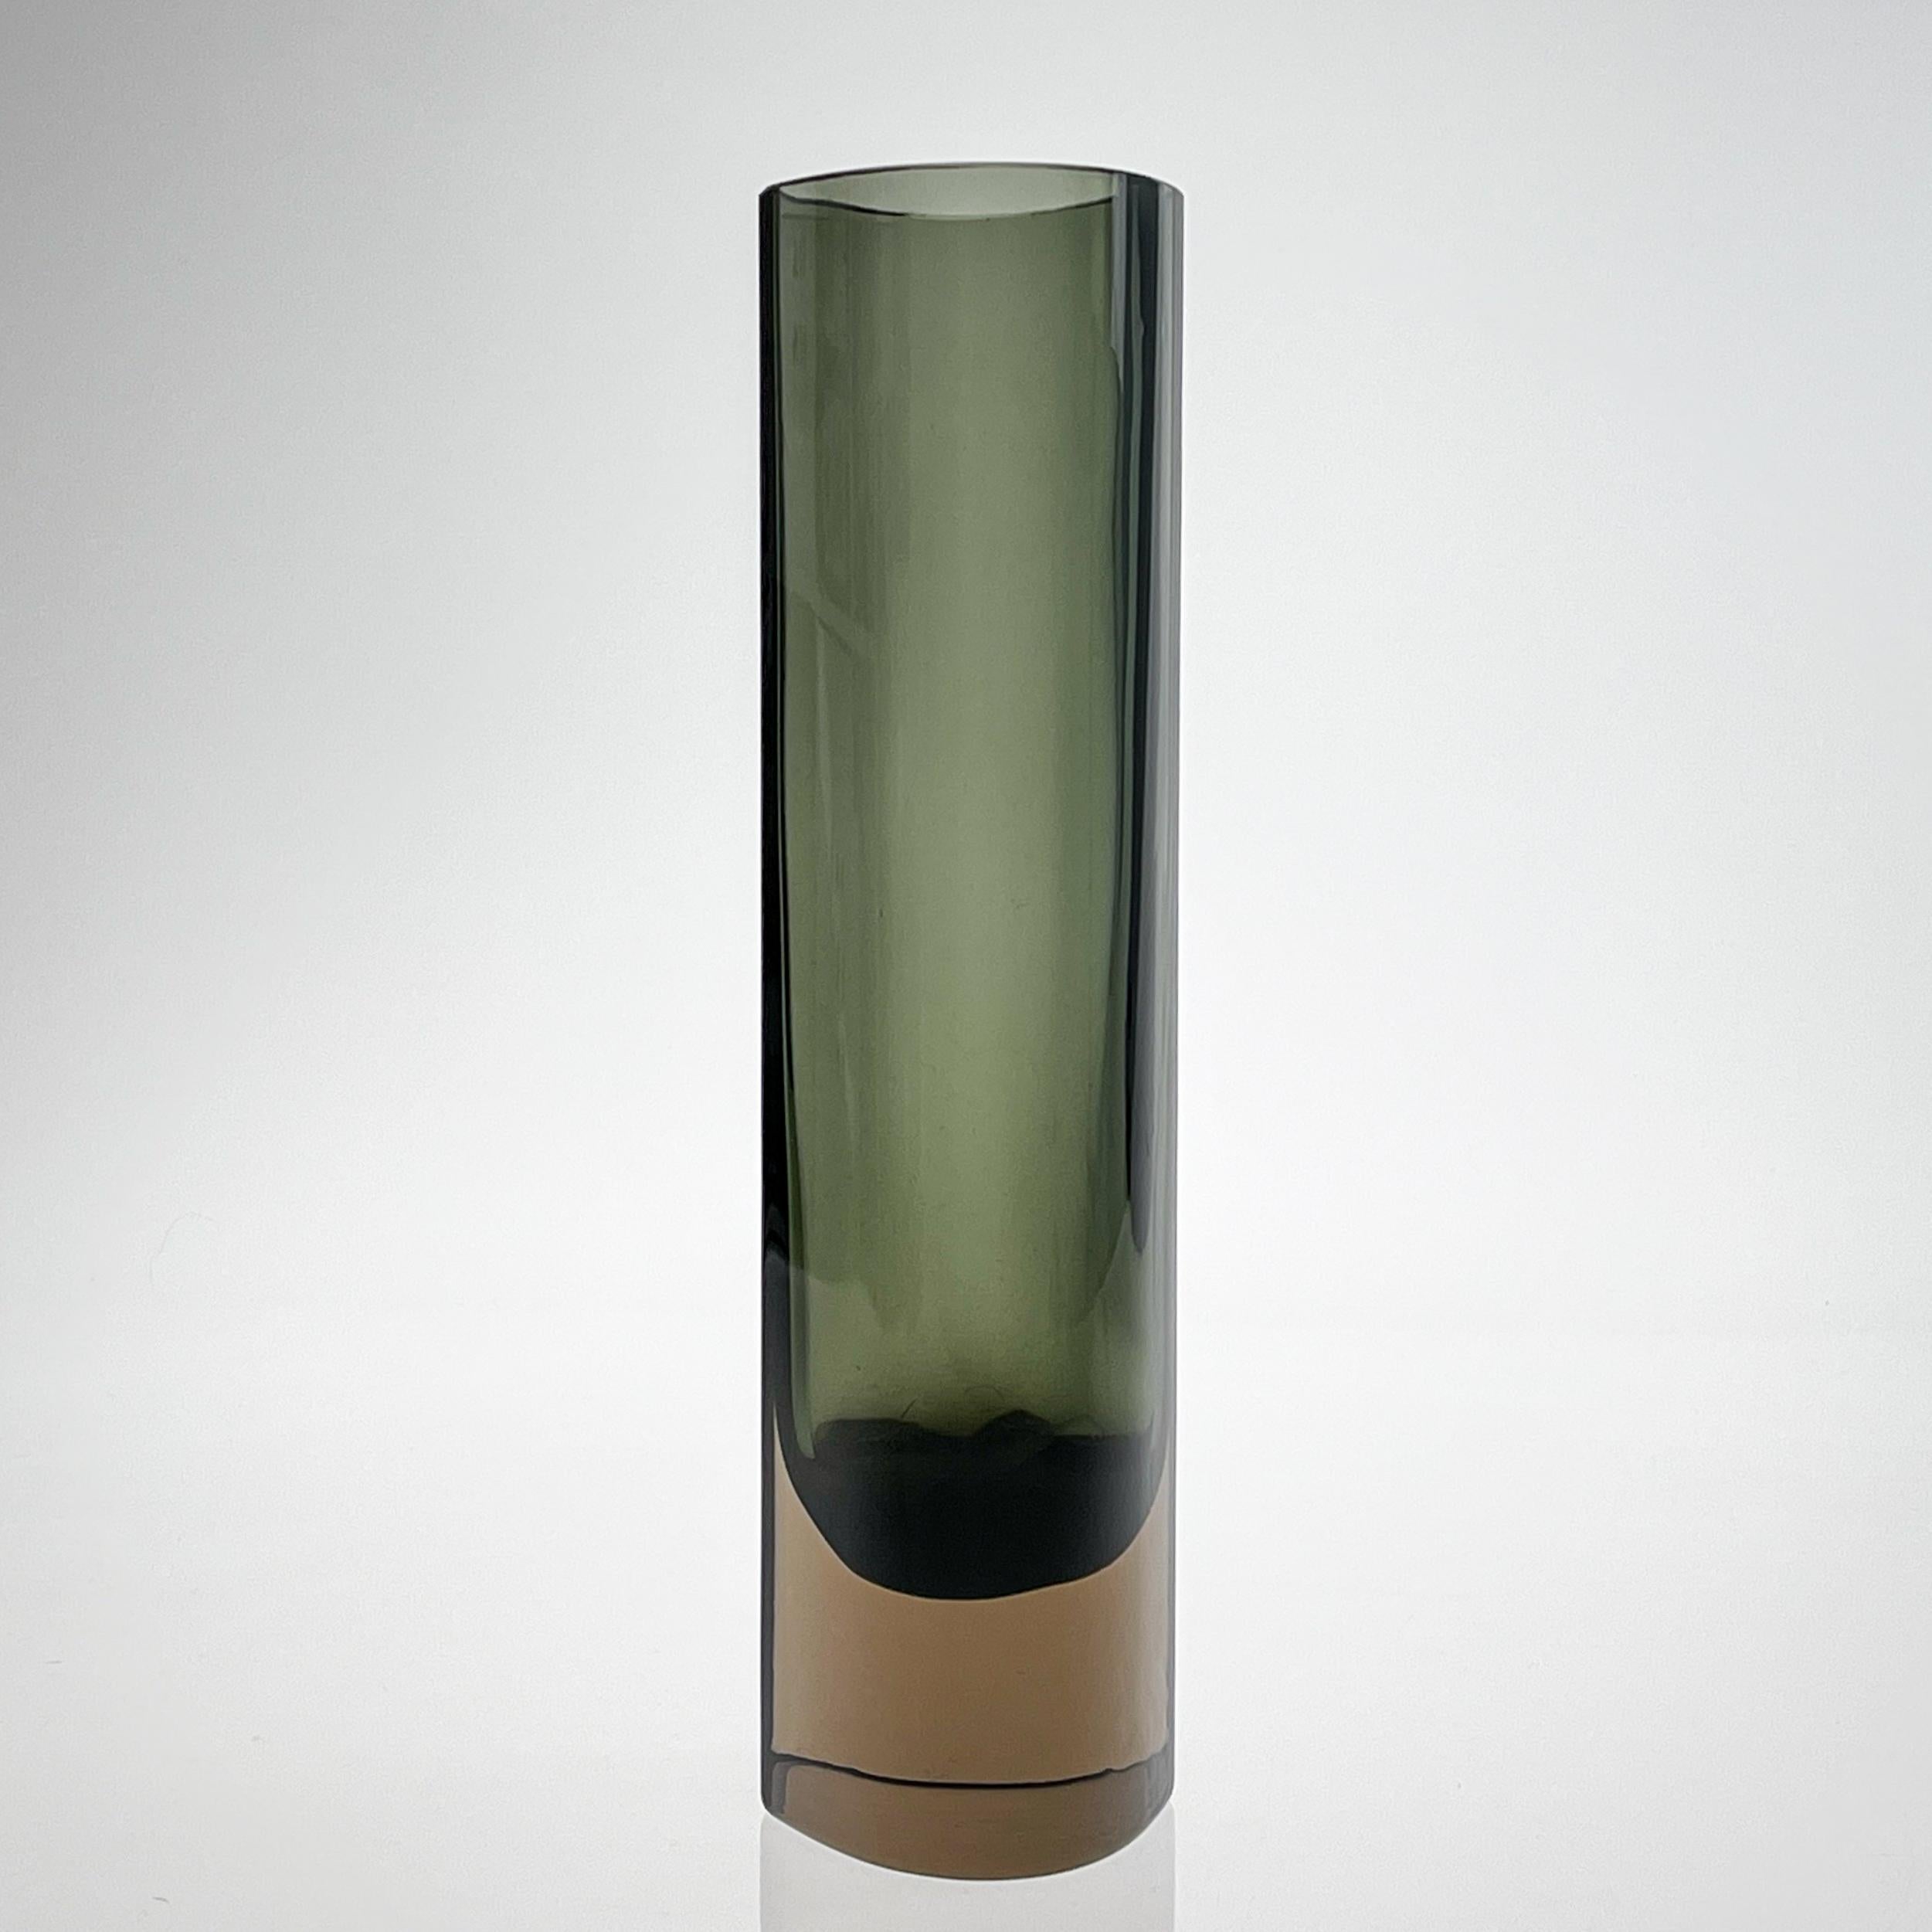 Scandinavian Modern Kaj Franck Art-Glass Vase Handblown Green Brown circa 1967 For Sale 1